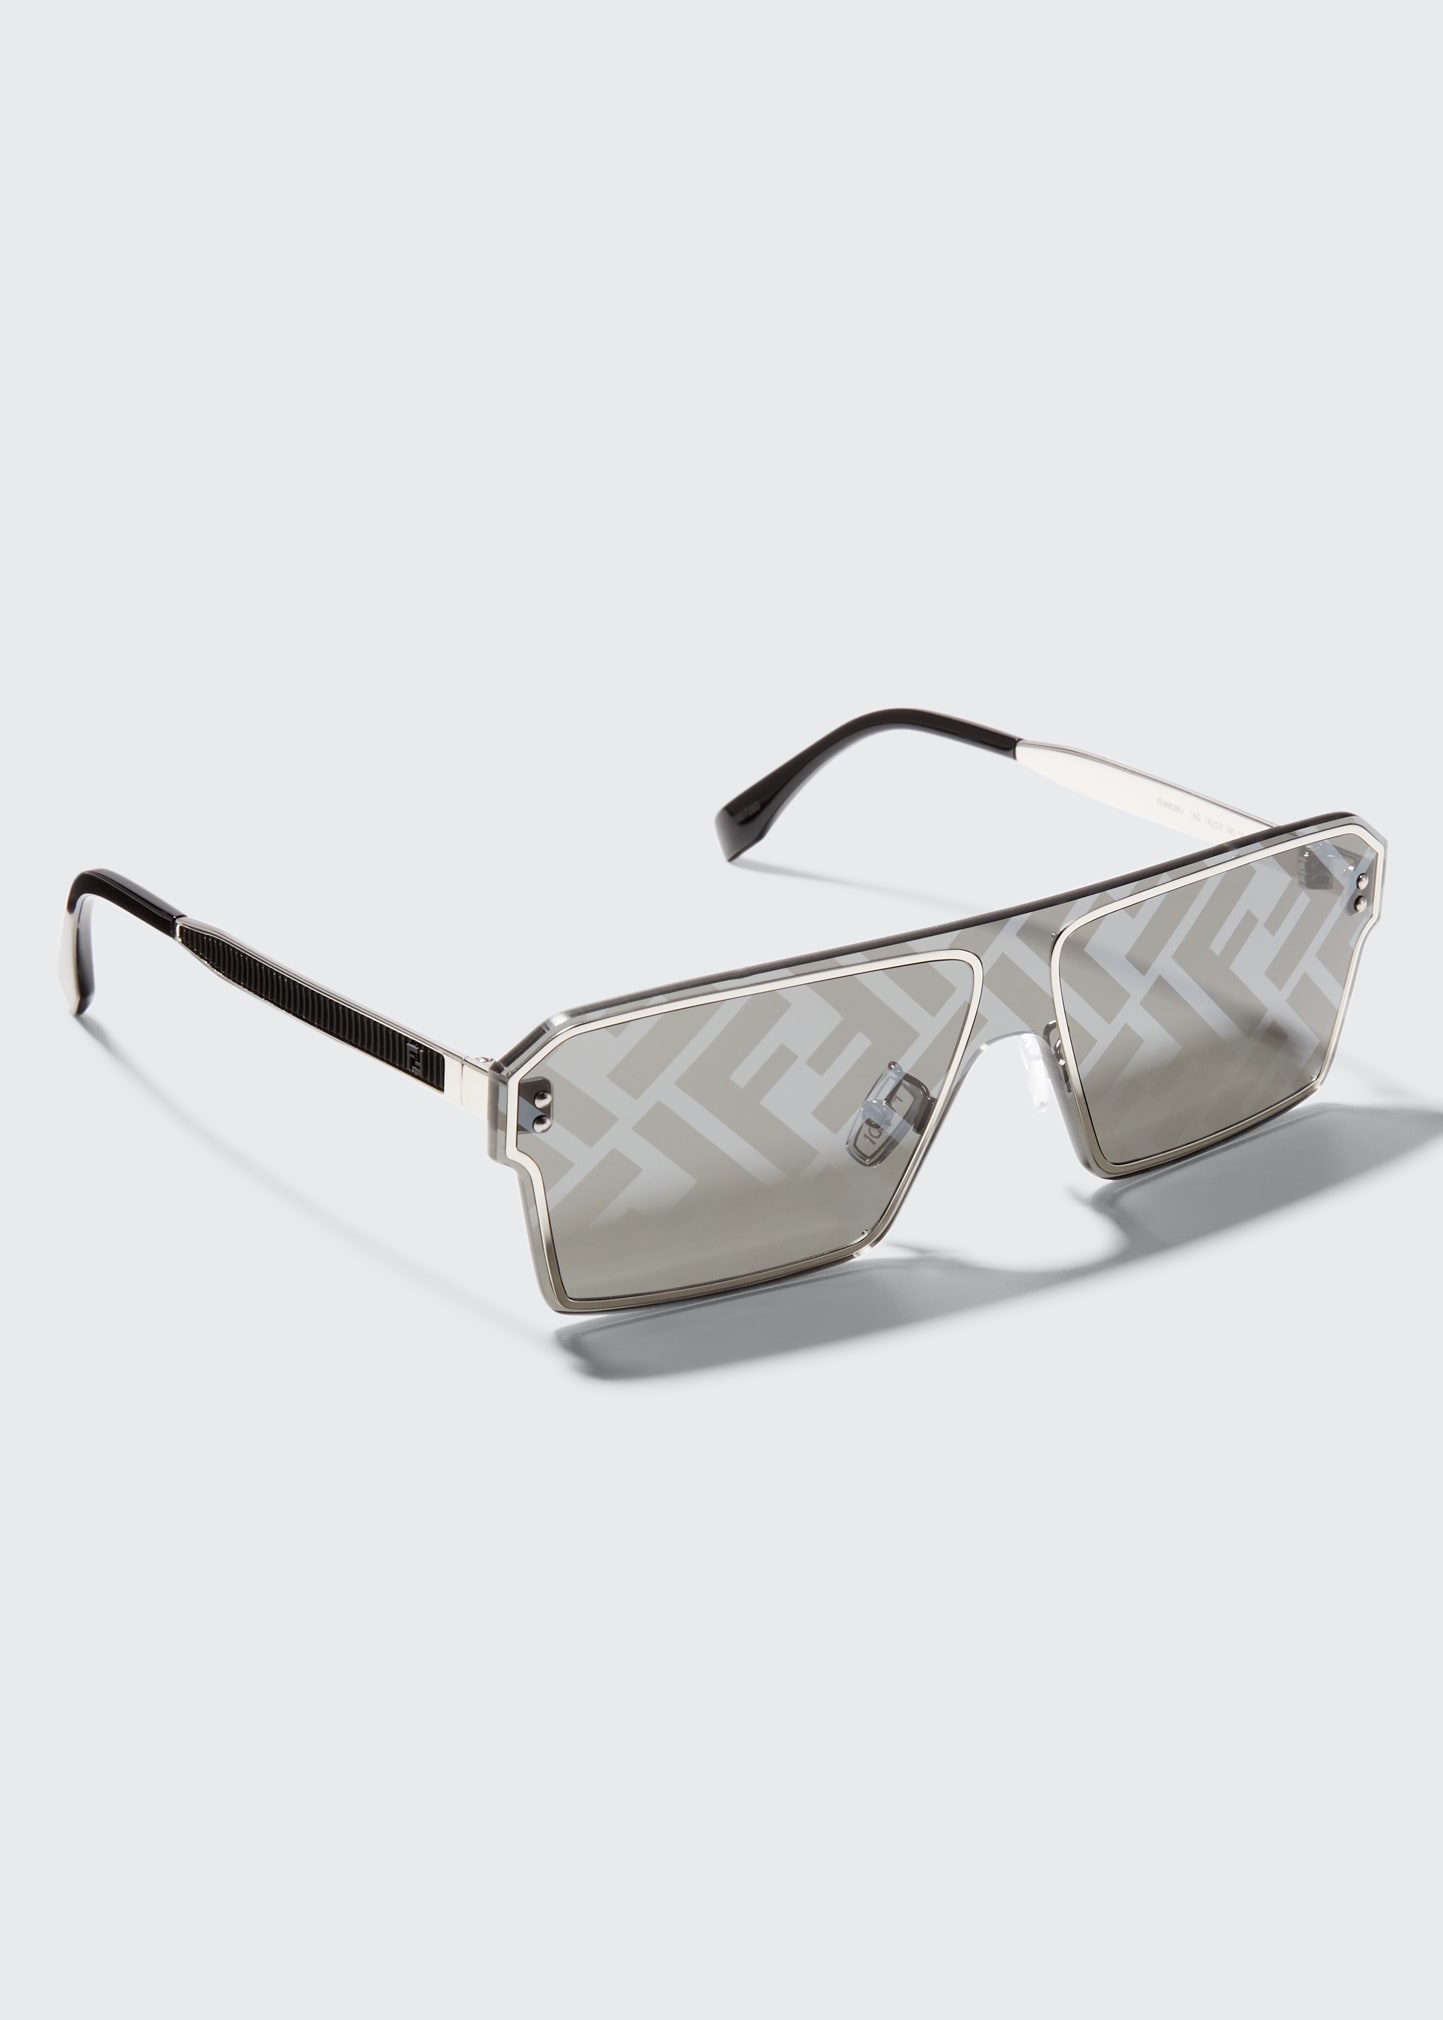 Authentic $590 FENDI Men's FF Printed Monogram 142MM Shield Sunglasses  - USED